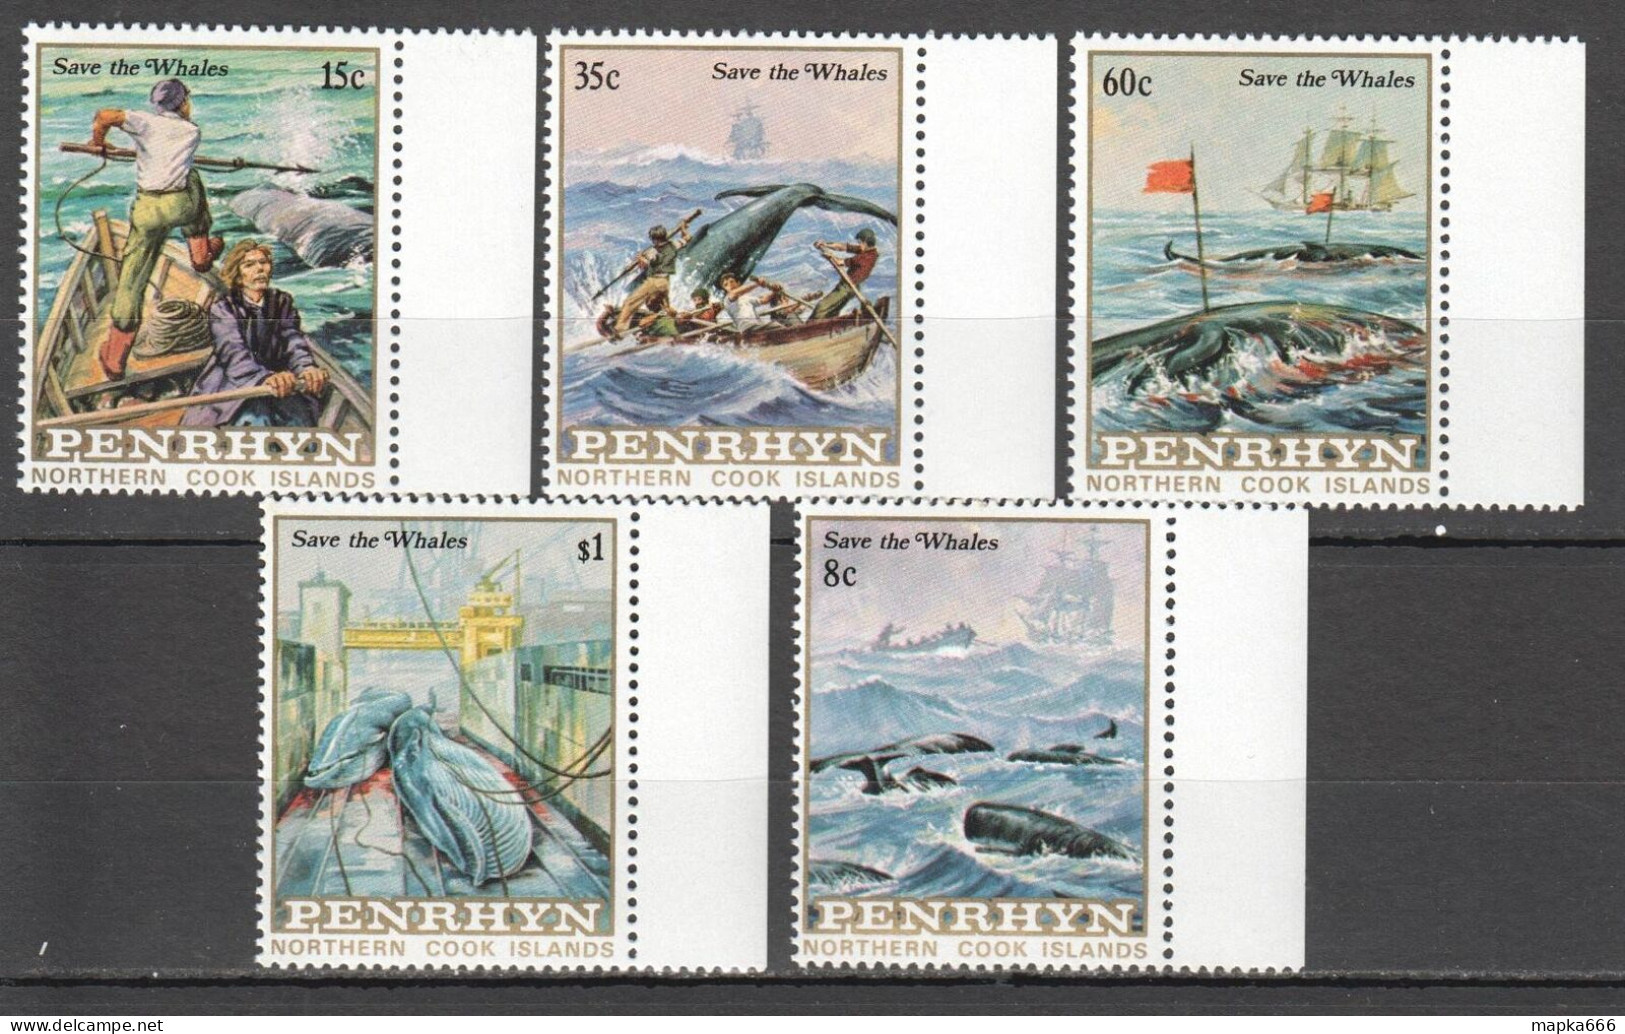 B1343 1983 Penrhyn Northern Cook Islands Marine Life Save The Whales 1Set Mnh - Meereswelt